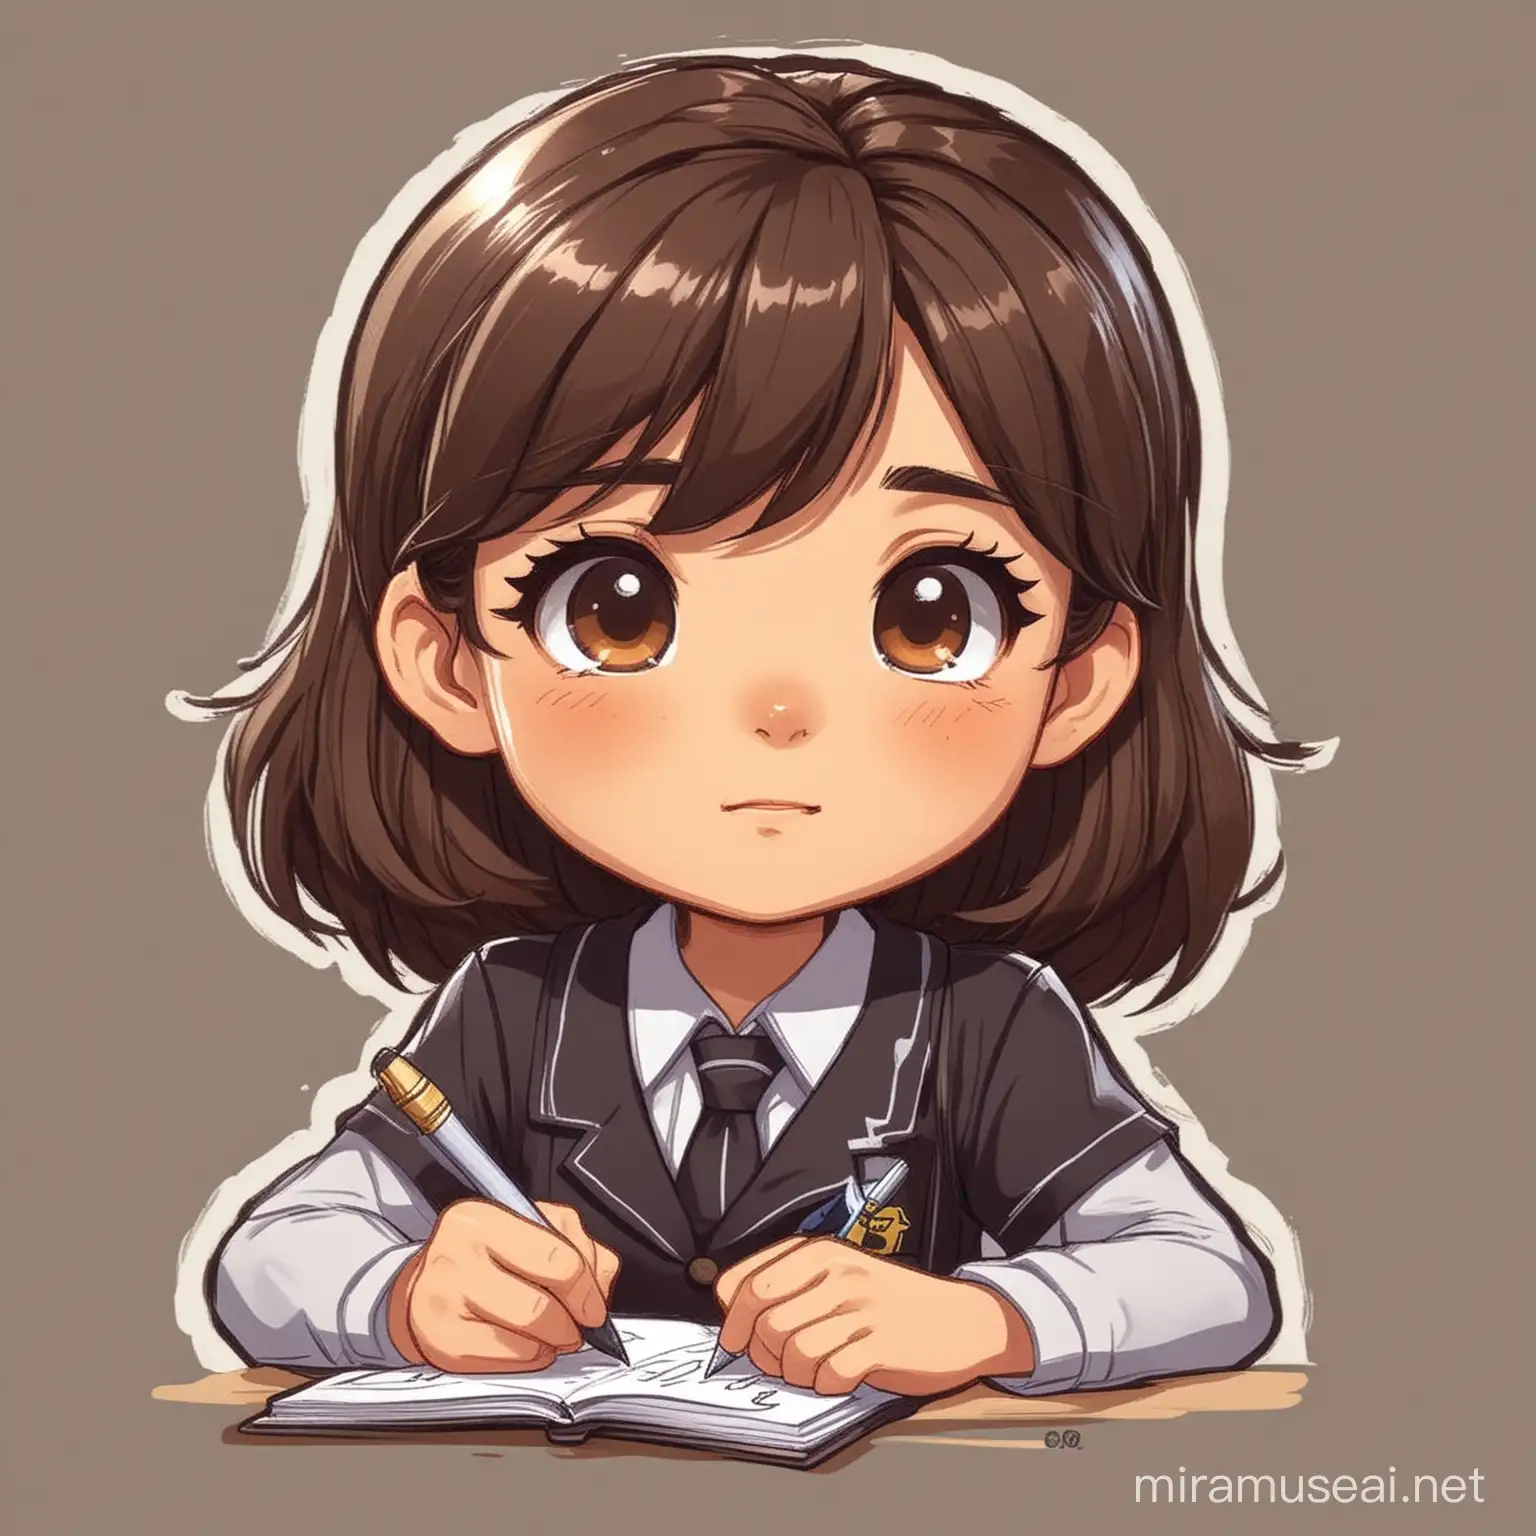 girl, wearing school uniform, writing, cartoon sticker style, high level detail, dark brown colored hair